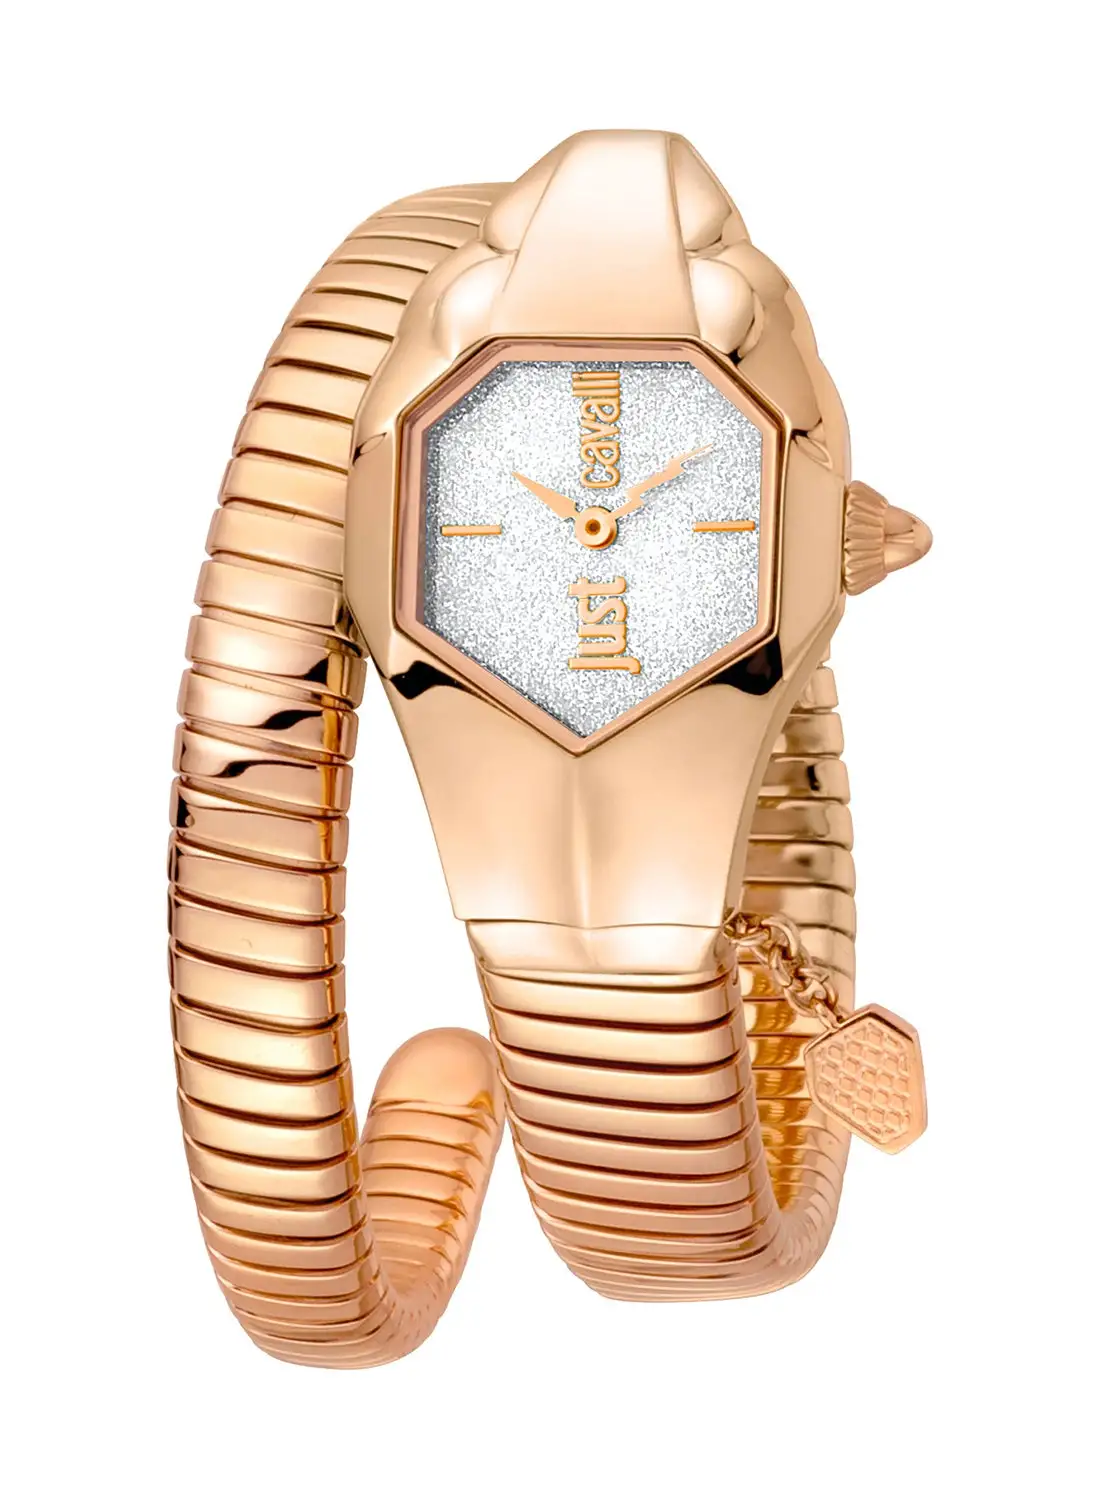 Justcavalli Men's Analog Hexagon Shape Stainless Steel Wrist Watch JC1L001M0155 - 22 Mm